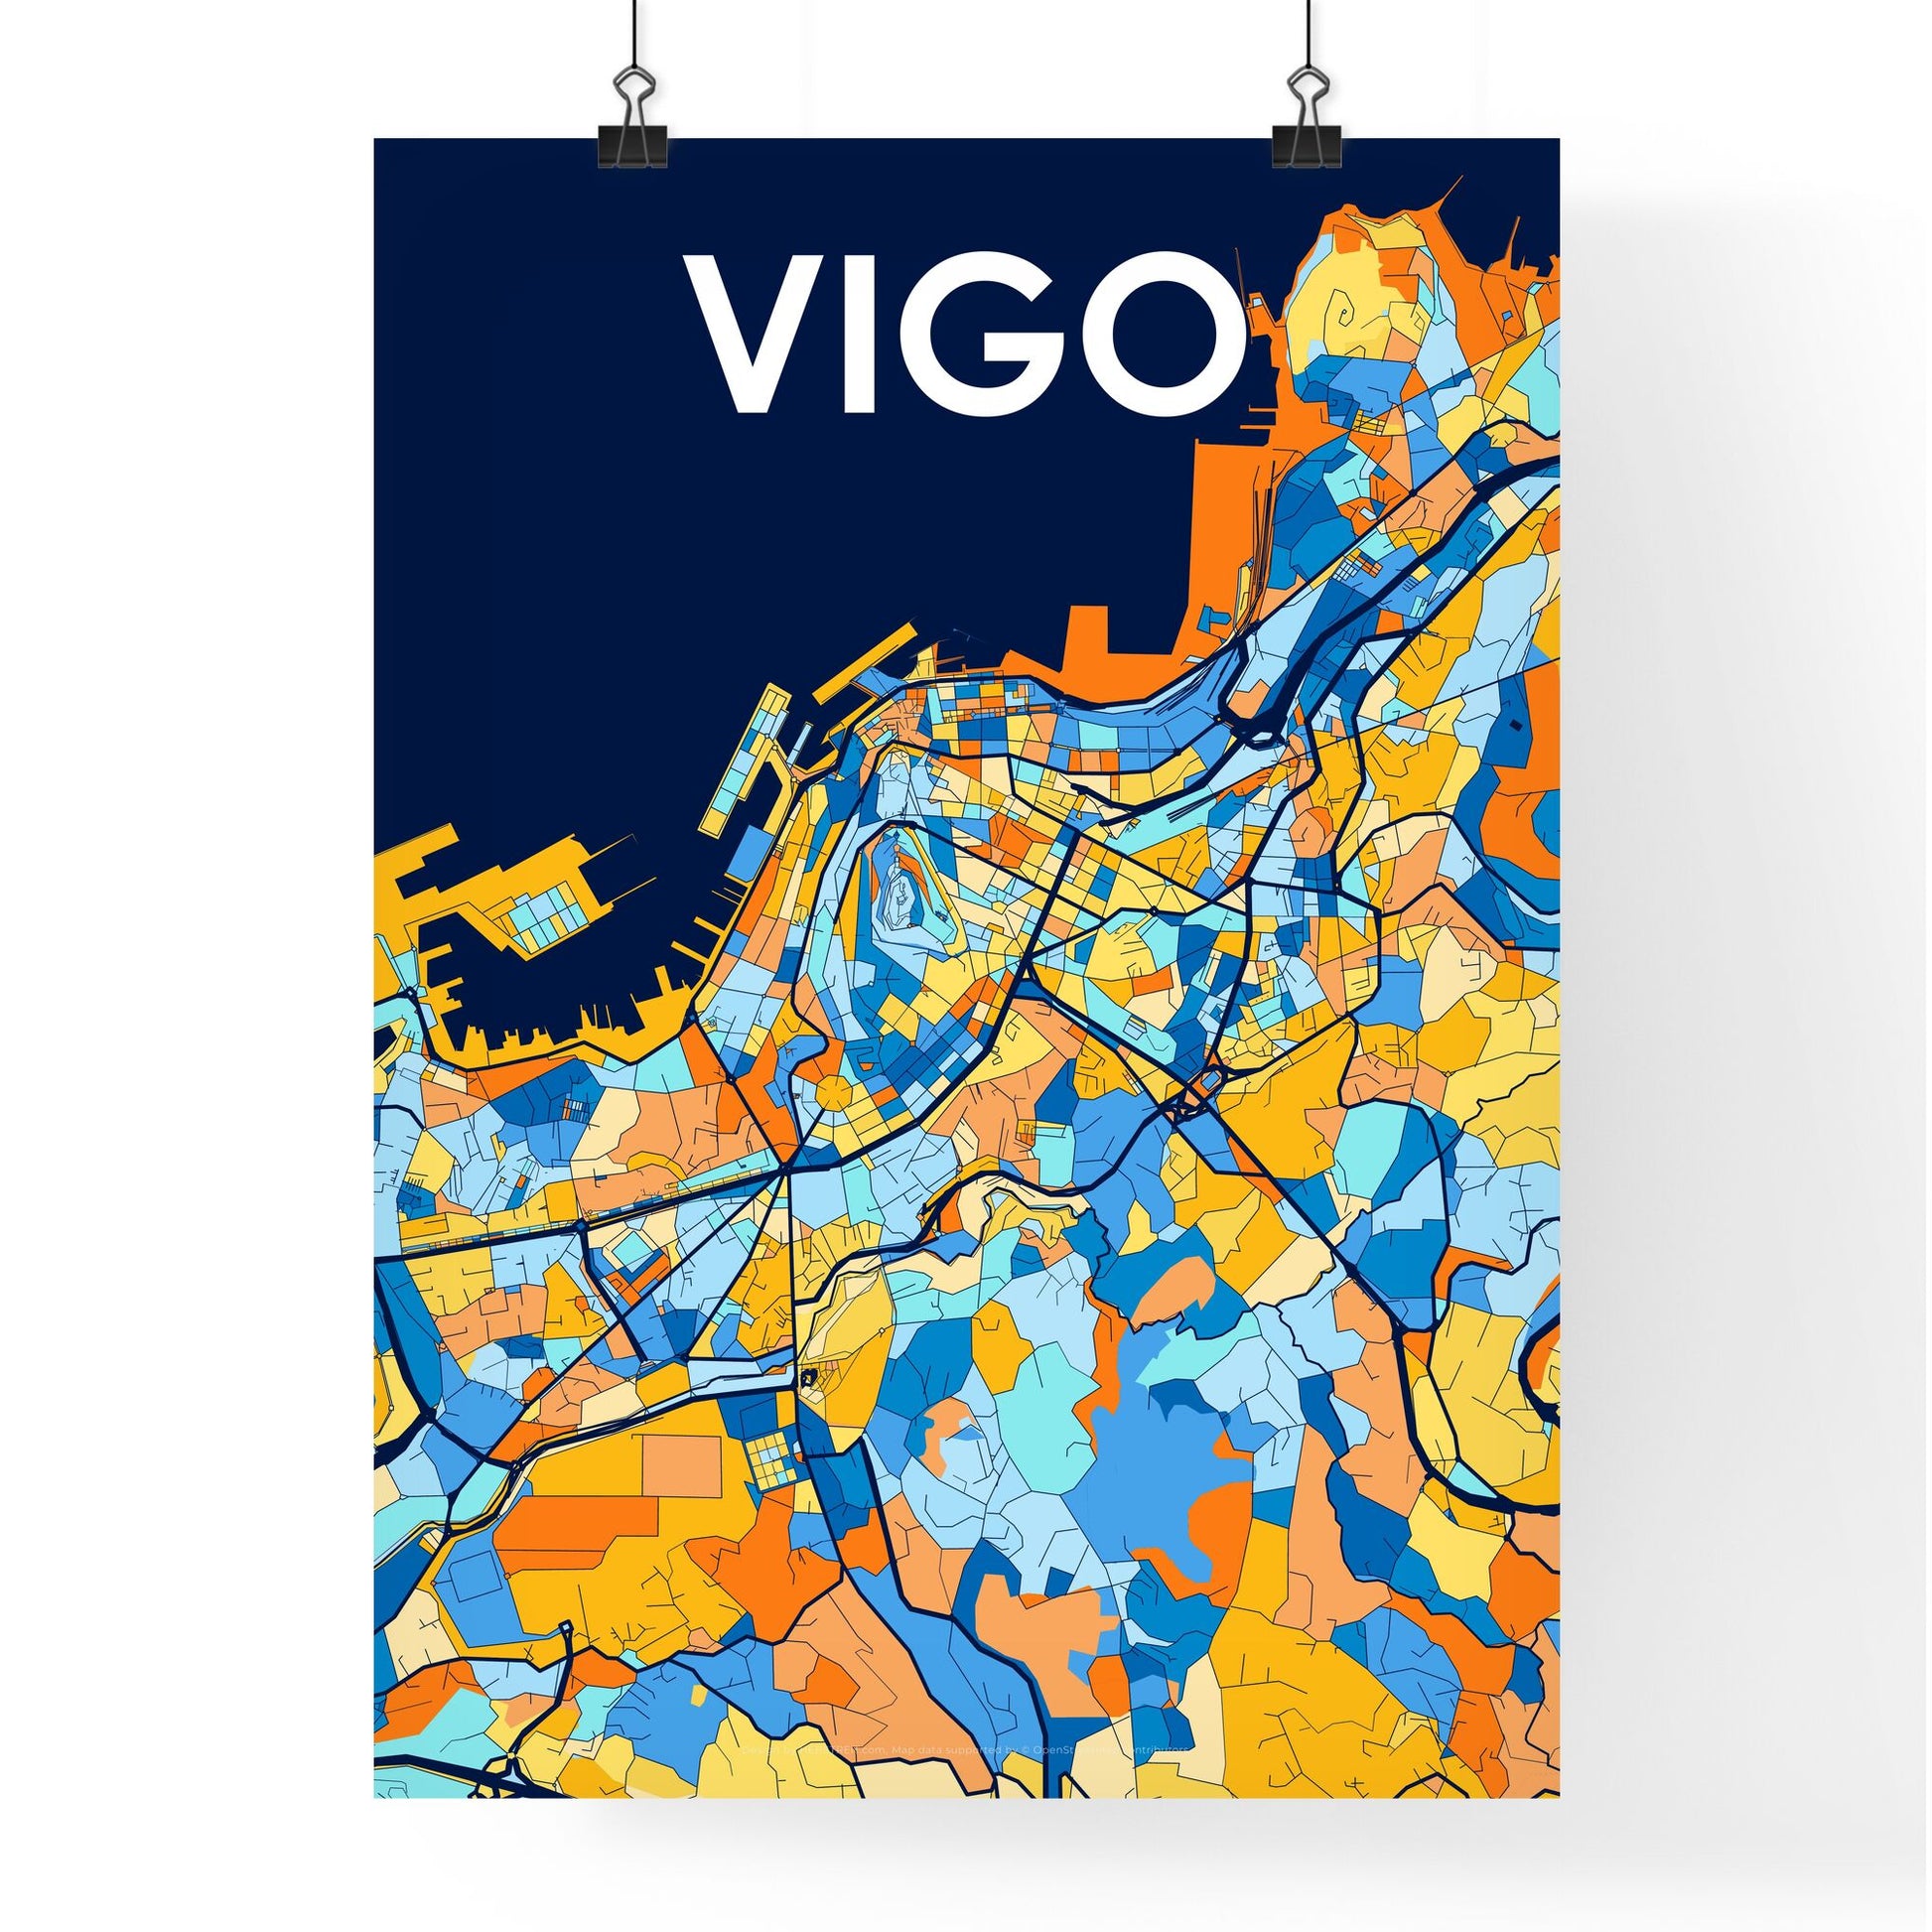 VIGO SPAIN Vibrant Colorful Art Map Poster Blue Orange